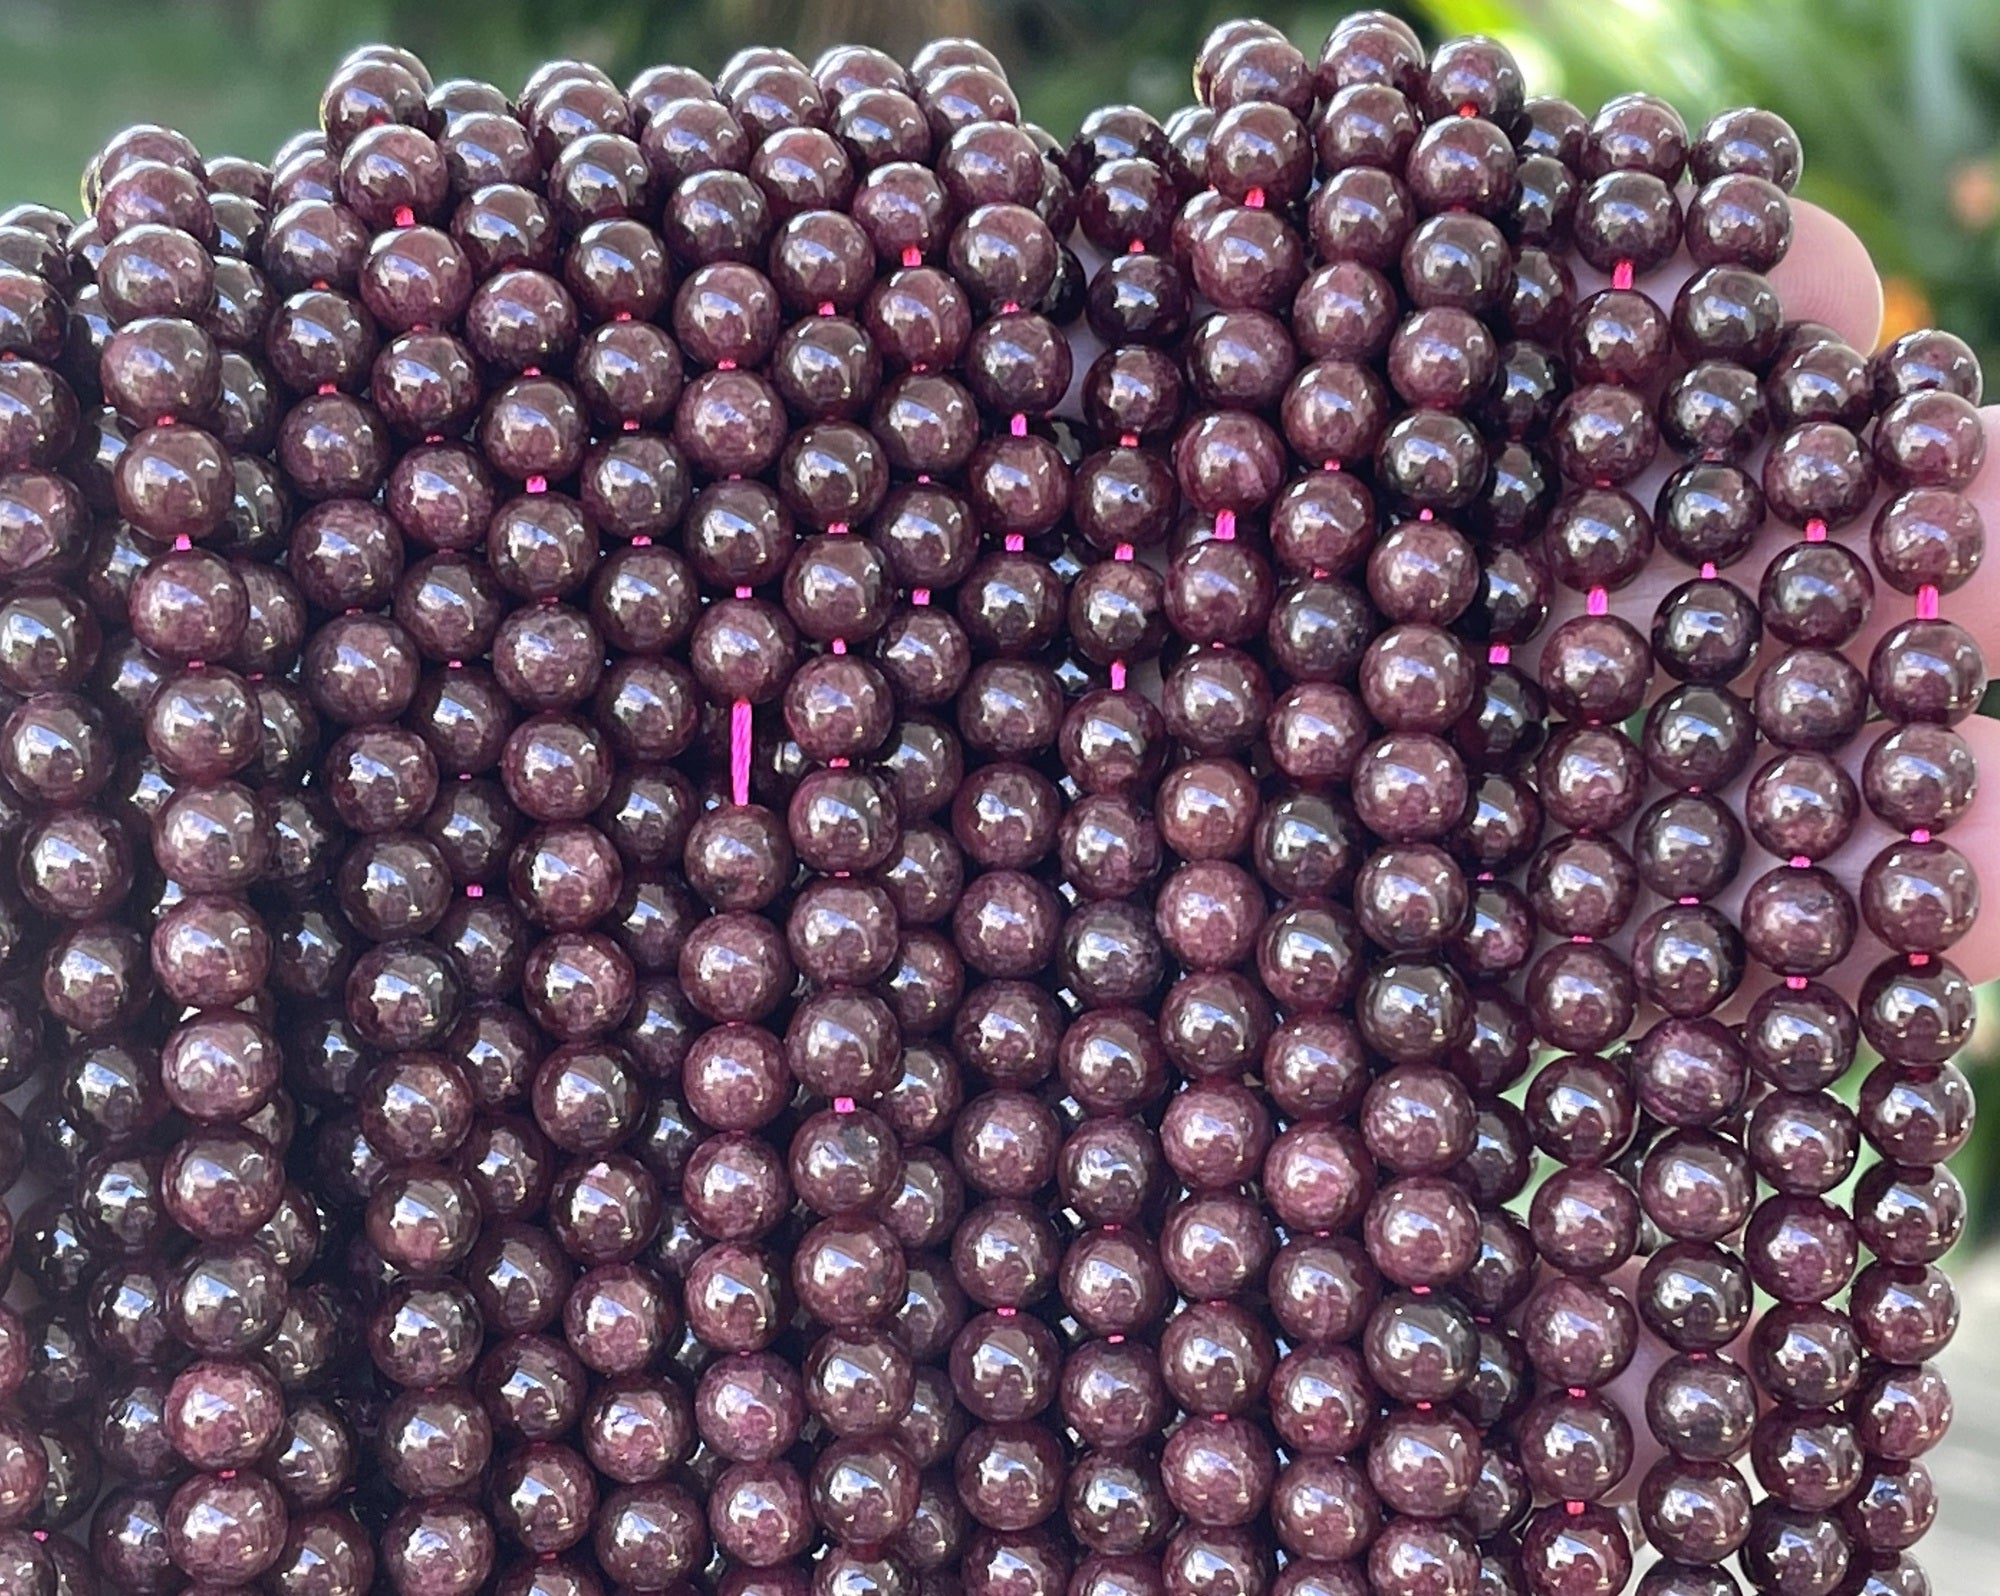 Red Garnet 6mm round gemstone beads 15" strand